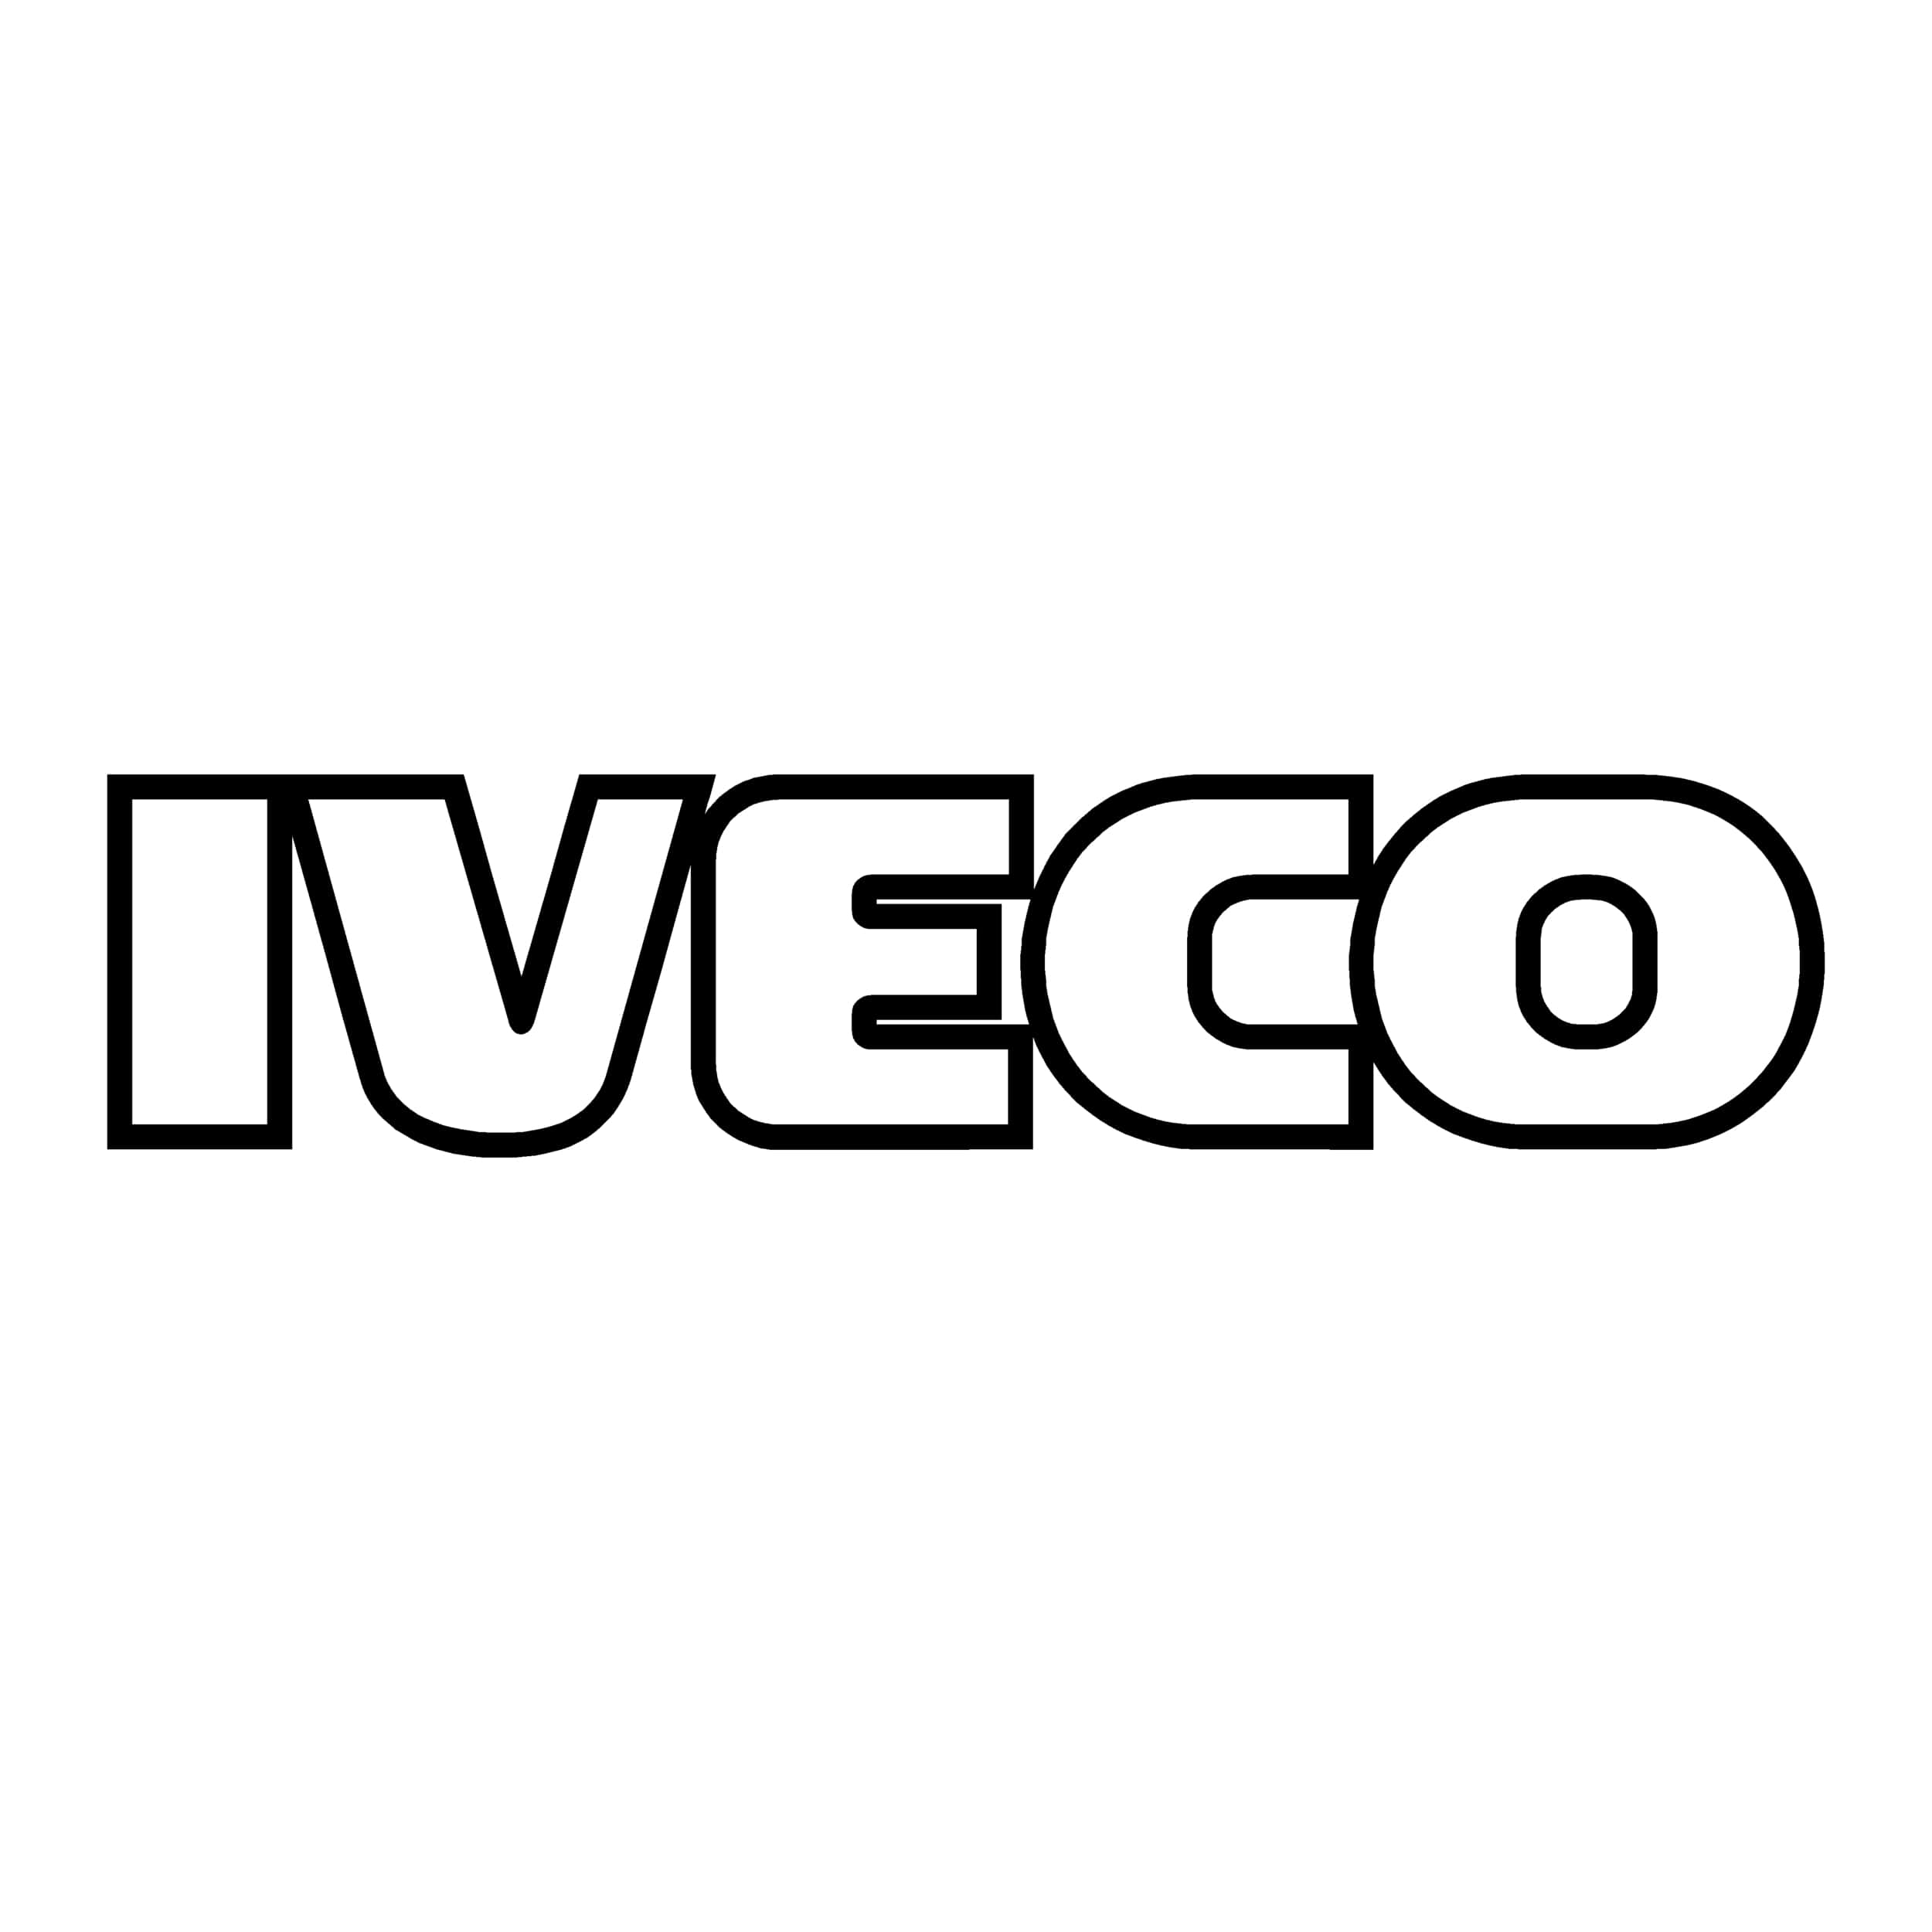 stickers-iveco-ref-2-auto-tuning-amortisseur-4x4-tout-terrain-auto-camion-competition-rallye-autocollant-min